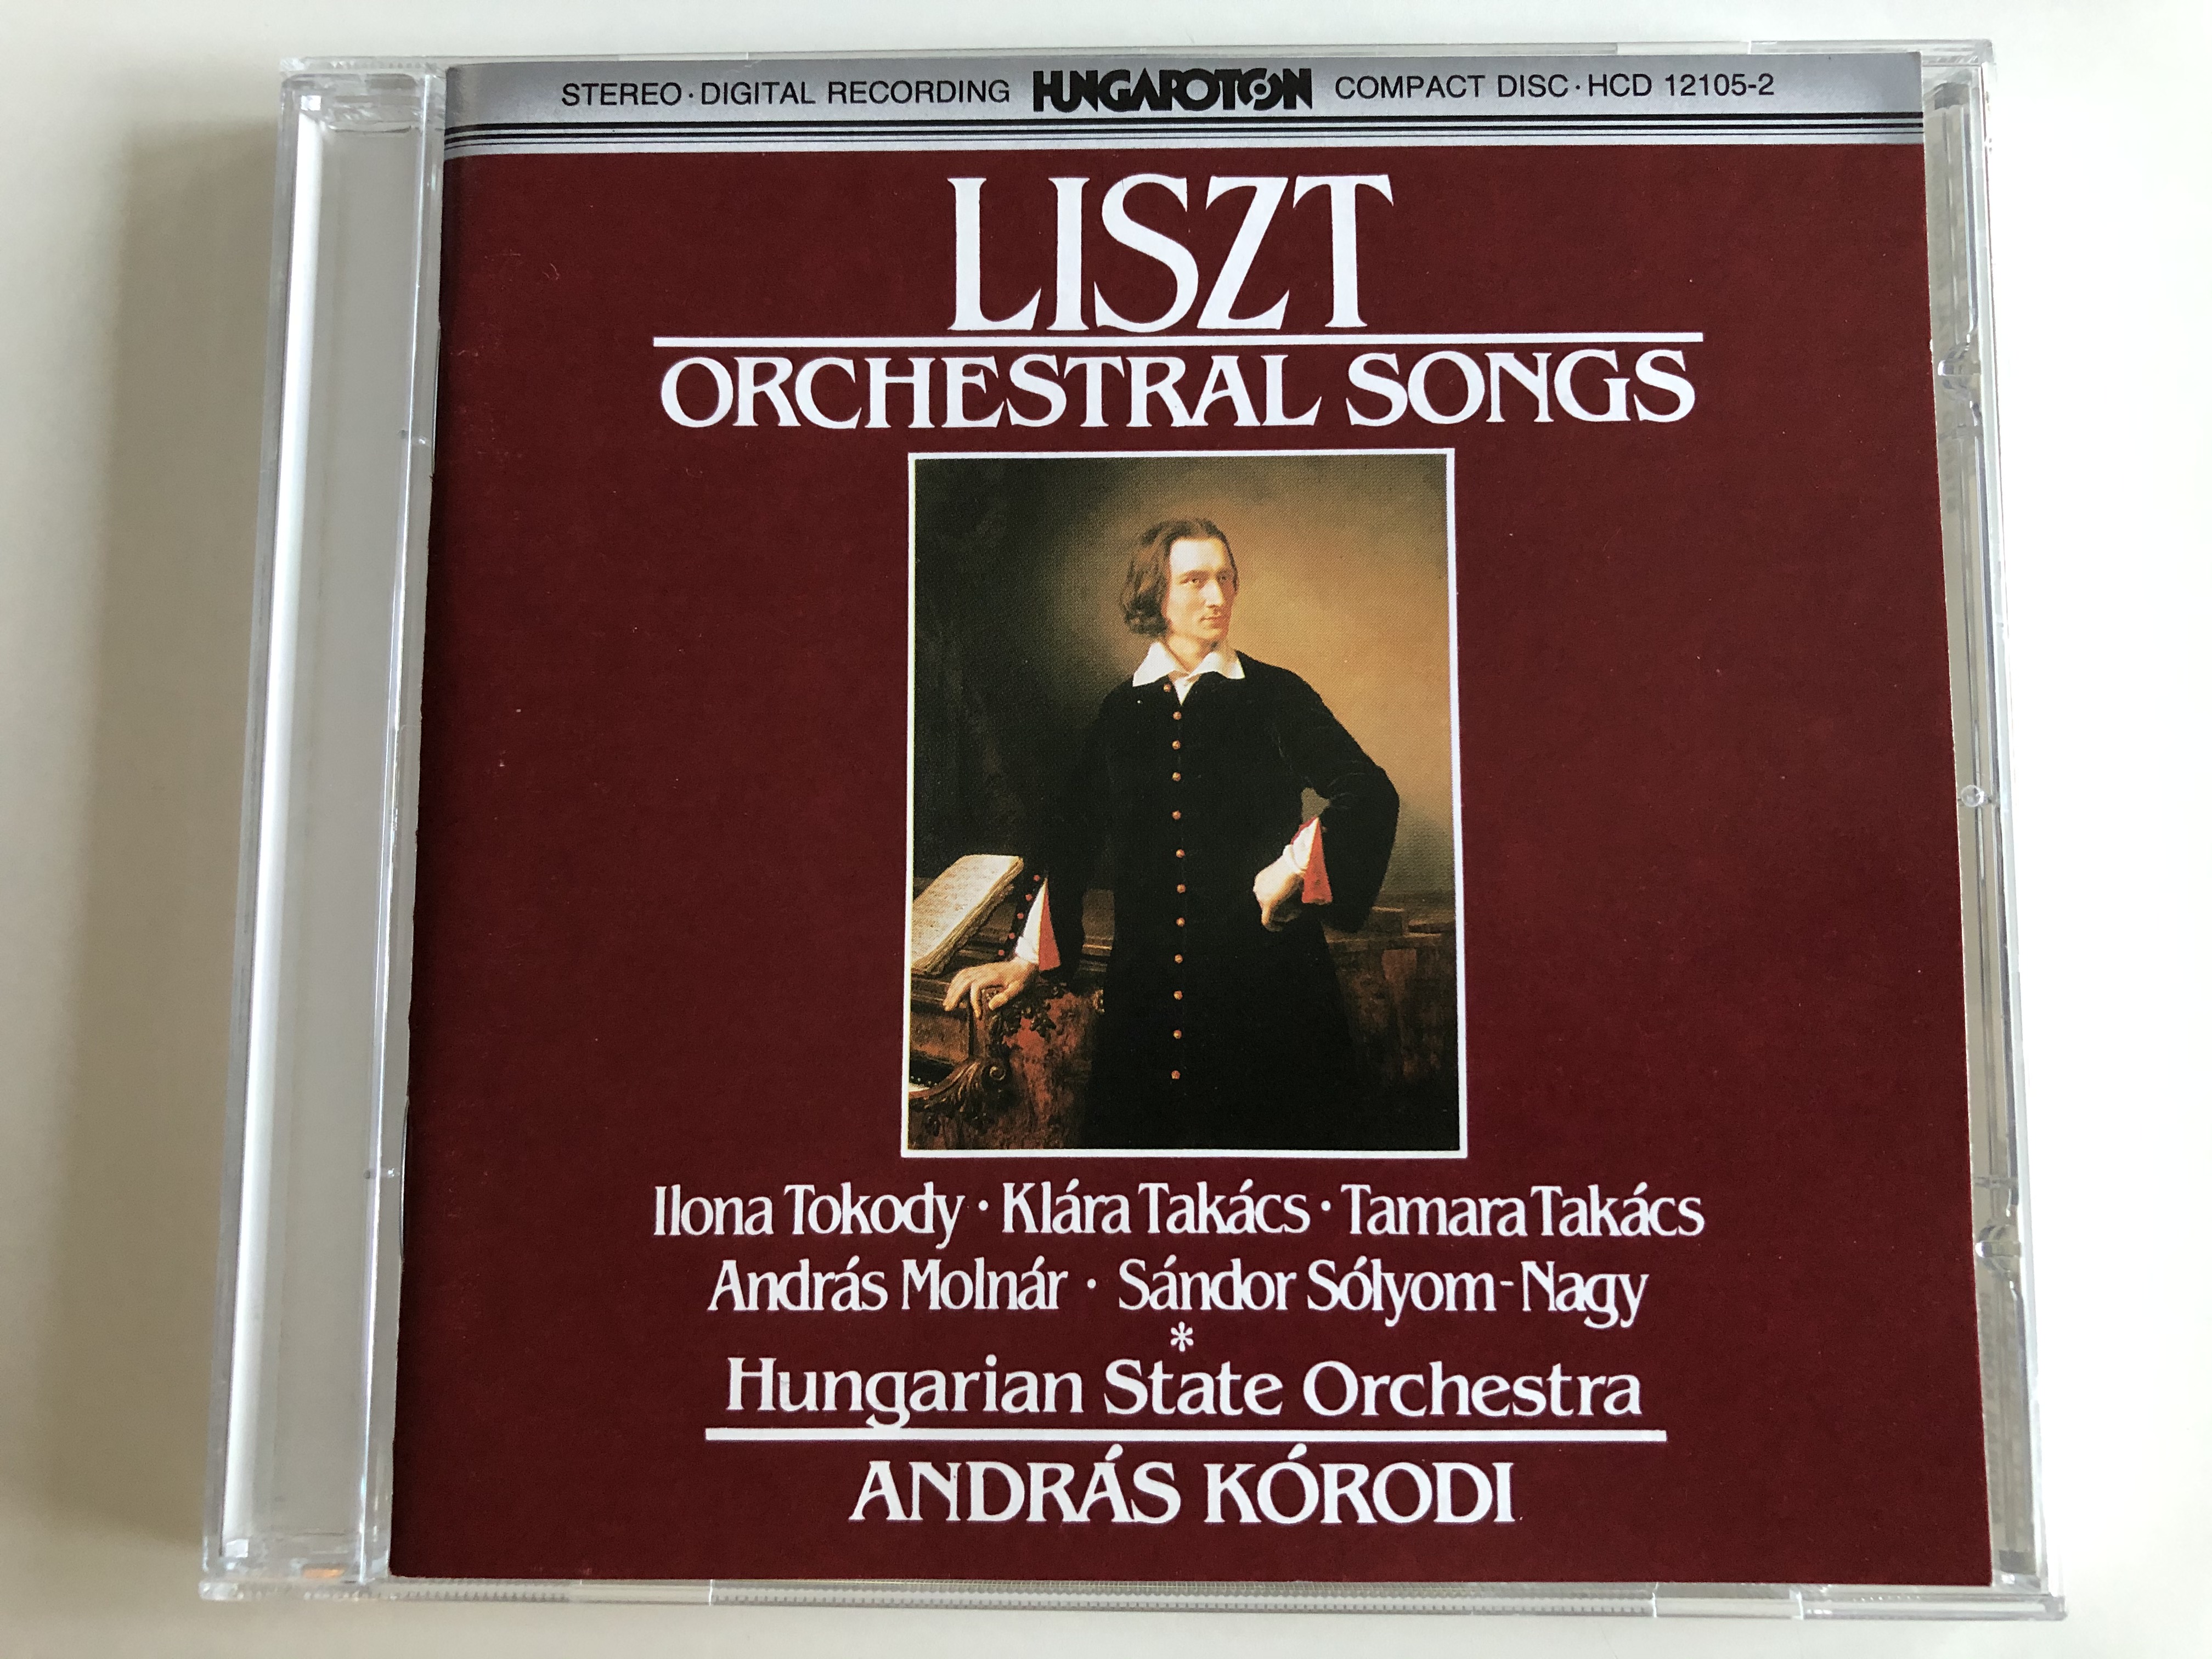 liszt-orchestral-songs-ilona-tokody-kl-ra-tak-cs-tamara-tak-cs-andr-s-moln-r-s-ndor-s-lyom-nagy-hungarian-state-orchestra-andr-s-k-rodi-hungaroton-audio-cd-1986-stereo-hcd-12105-2-1-.jpg